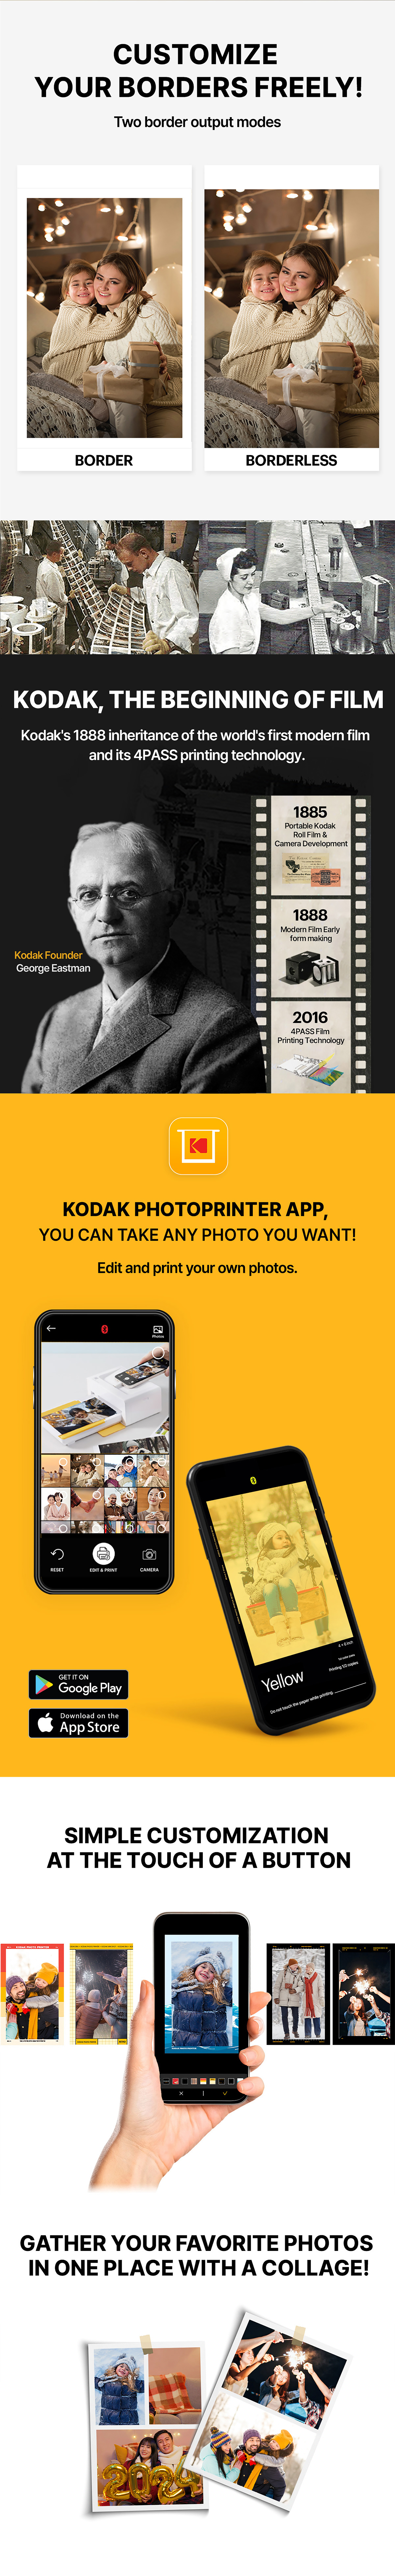 KODAK Mini 2 Retro 4PASS Portable Photo Printer (2.1x3.4 inches) + 68  Sheets Bundle, Black